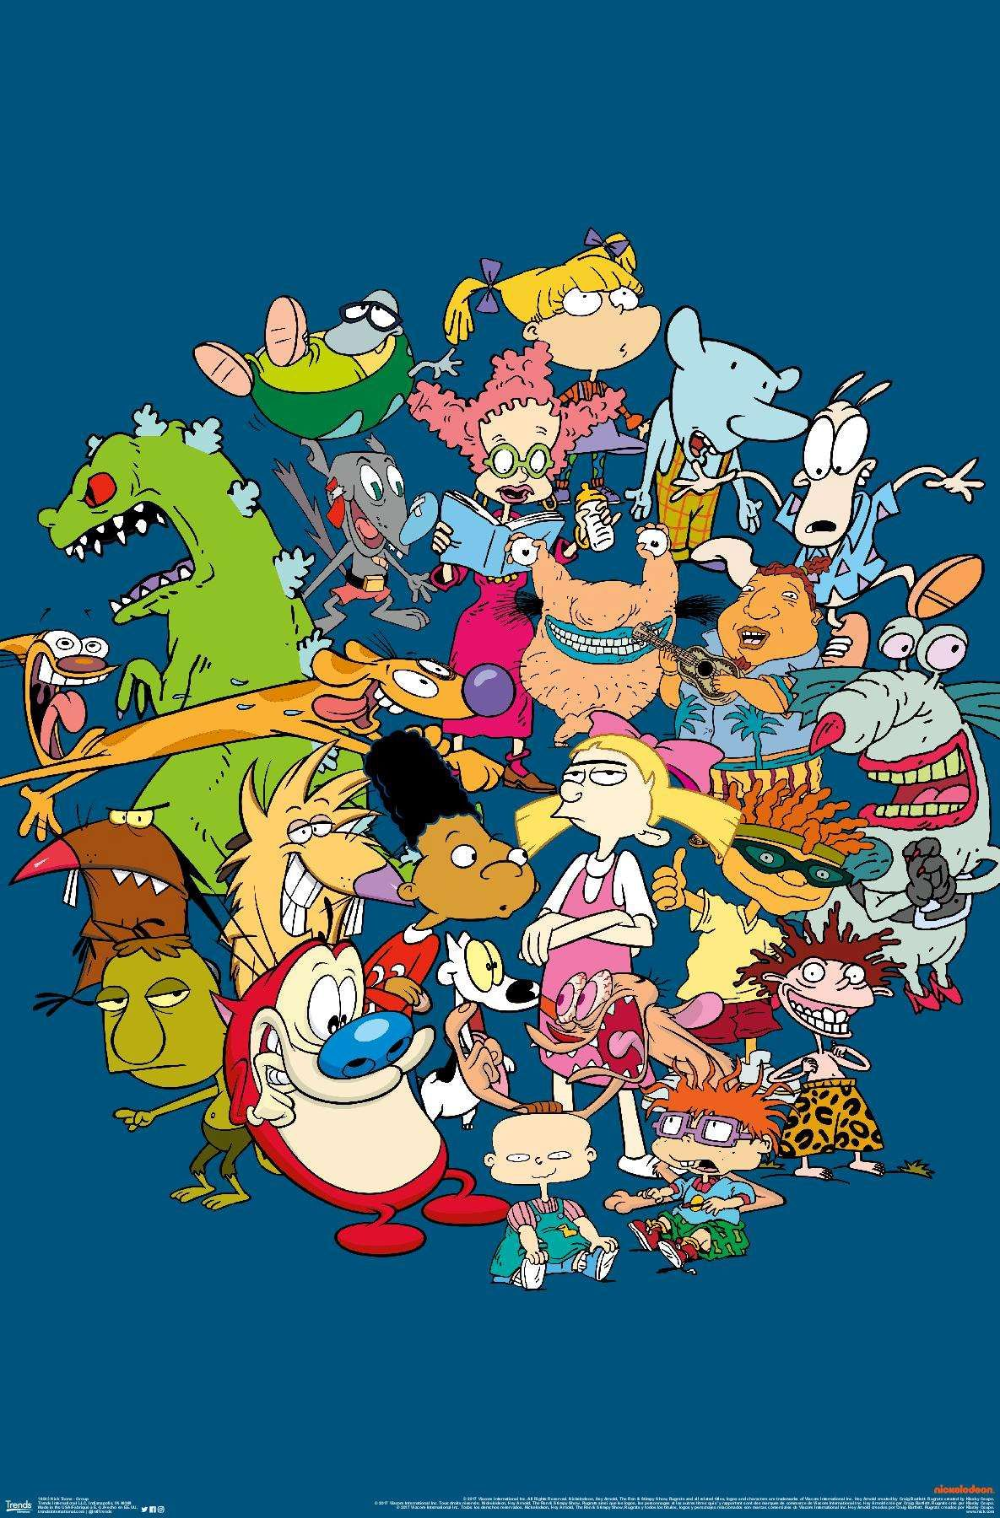 Nickelodeon Group. Cartoon wallpaper iphone, Cartoon wallpaper, 90s nickelodeon cartoons